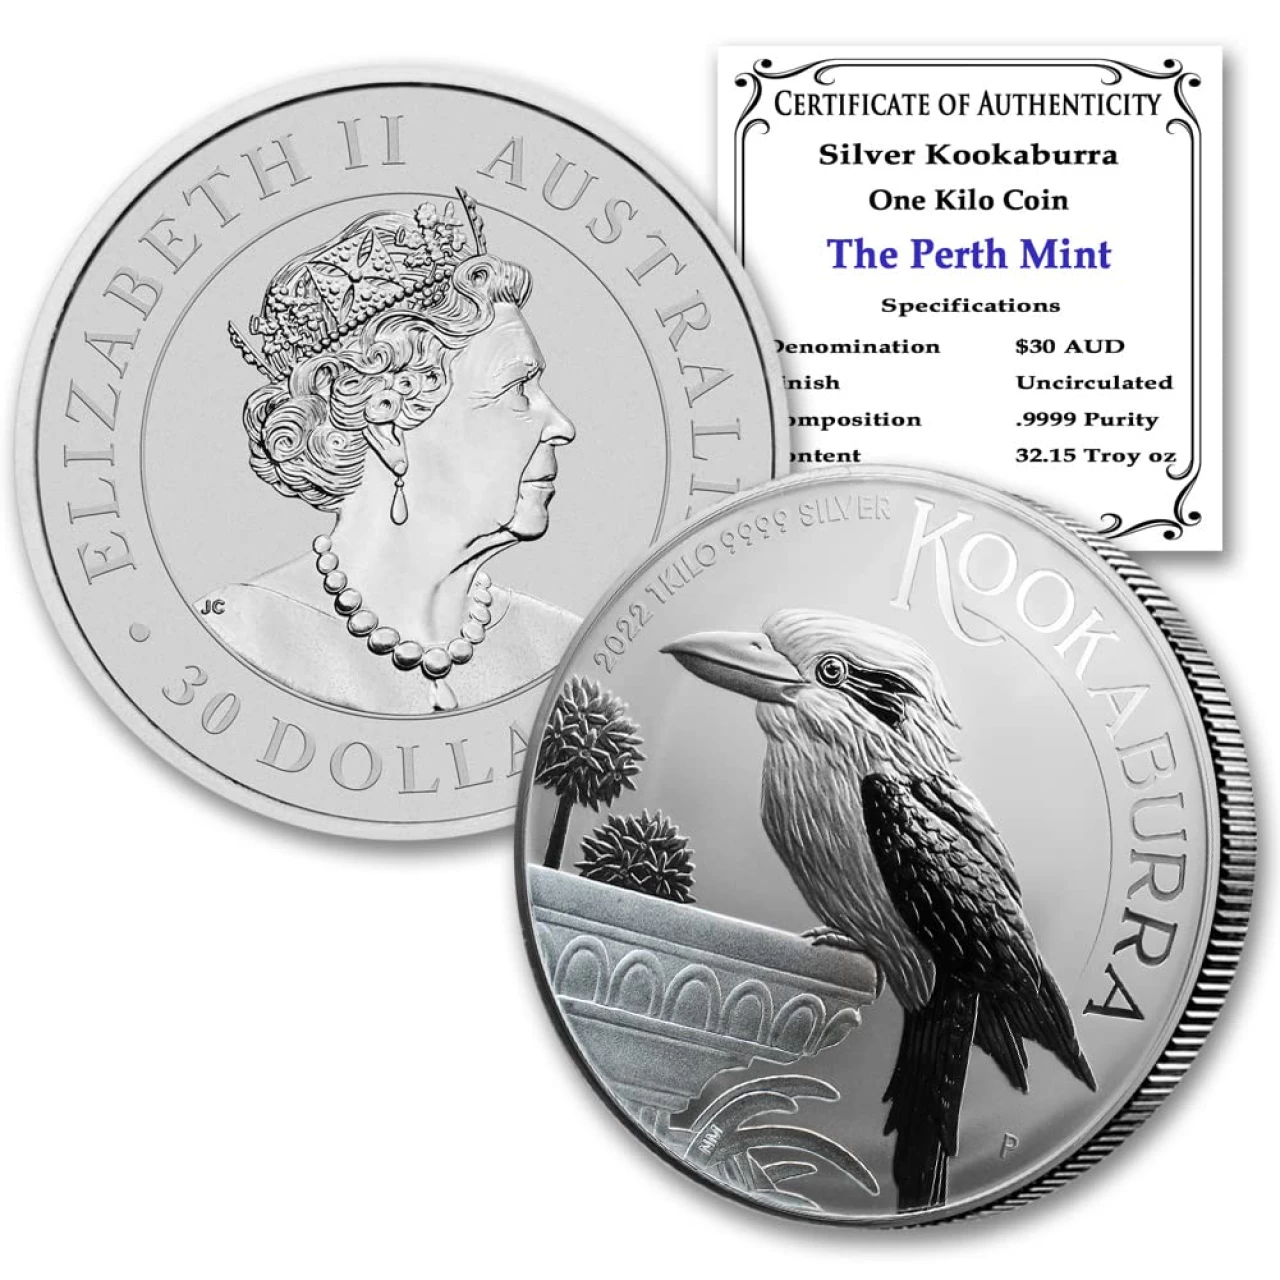 2022 P AU 1 Kilo (32.15 Troy oz) Australian Silver Kookaburra Paperweight Coin Brilliant Uncirculated (BU - in Capsule) with Certificate of Authenticity $30 BU